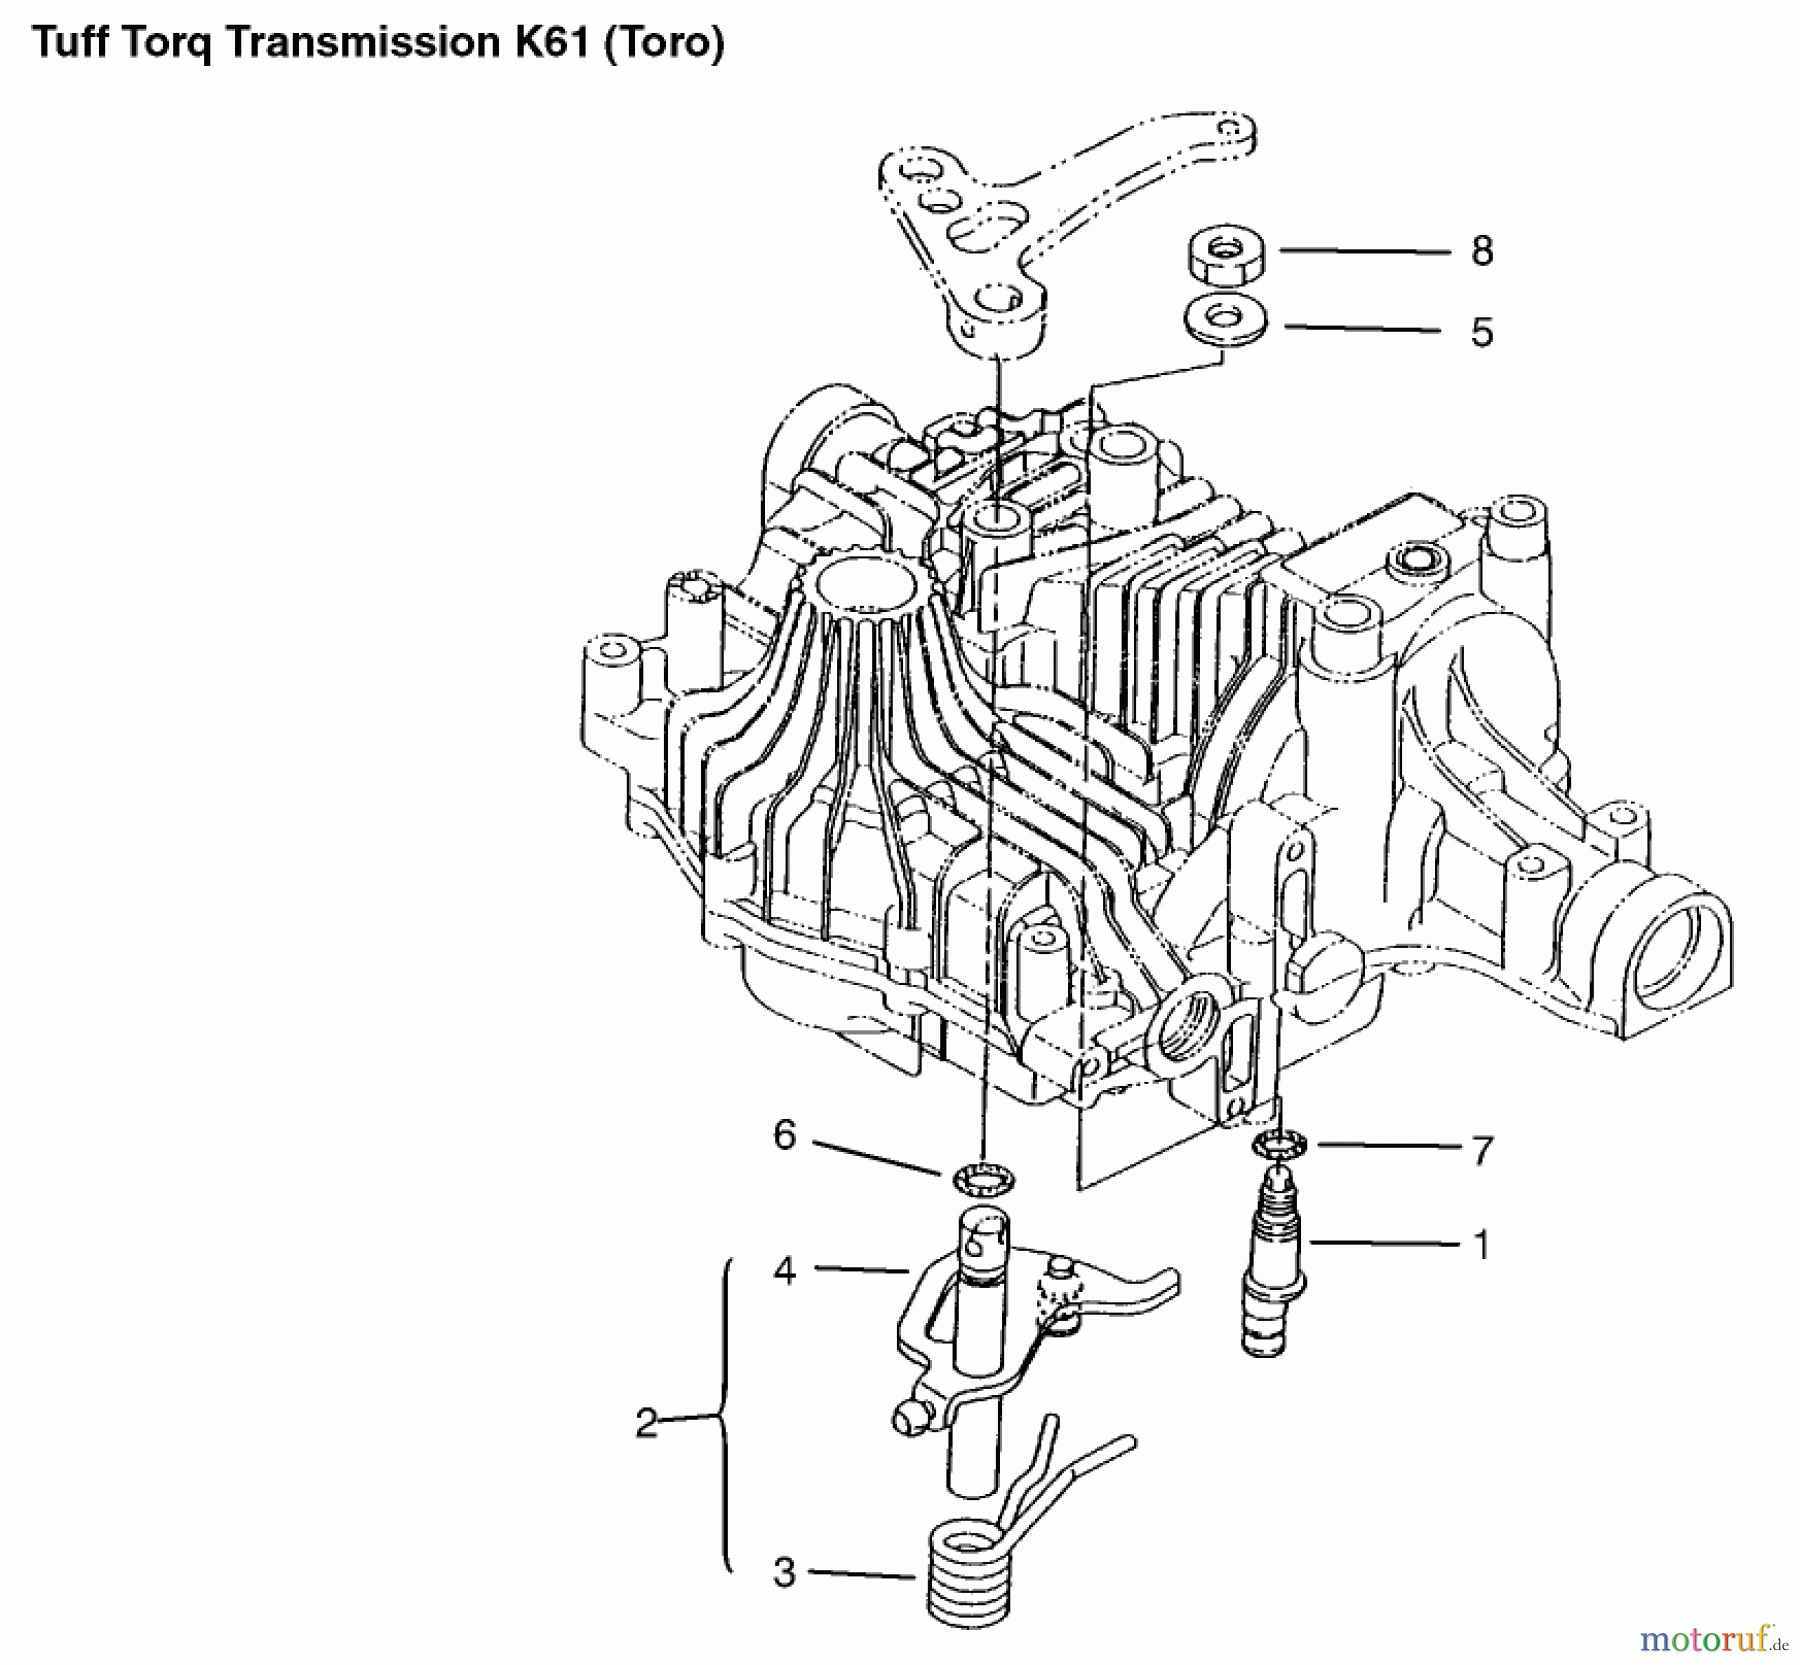  Toro Neu Mowers, Lawn & Garden Tractor Seite 1 72110 (270-H) - Toro 270-H Lawn and Garden Tractor, 1996 (6900001-6999999) N-CENTERING